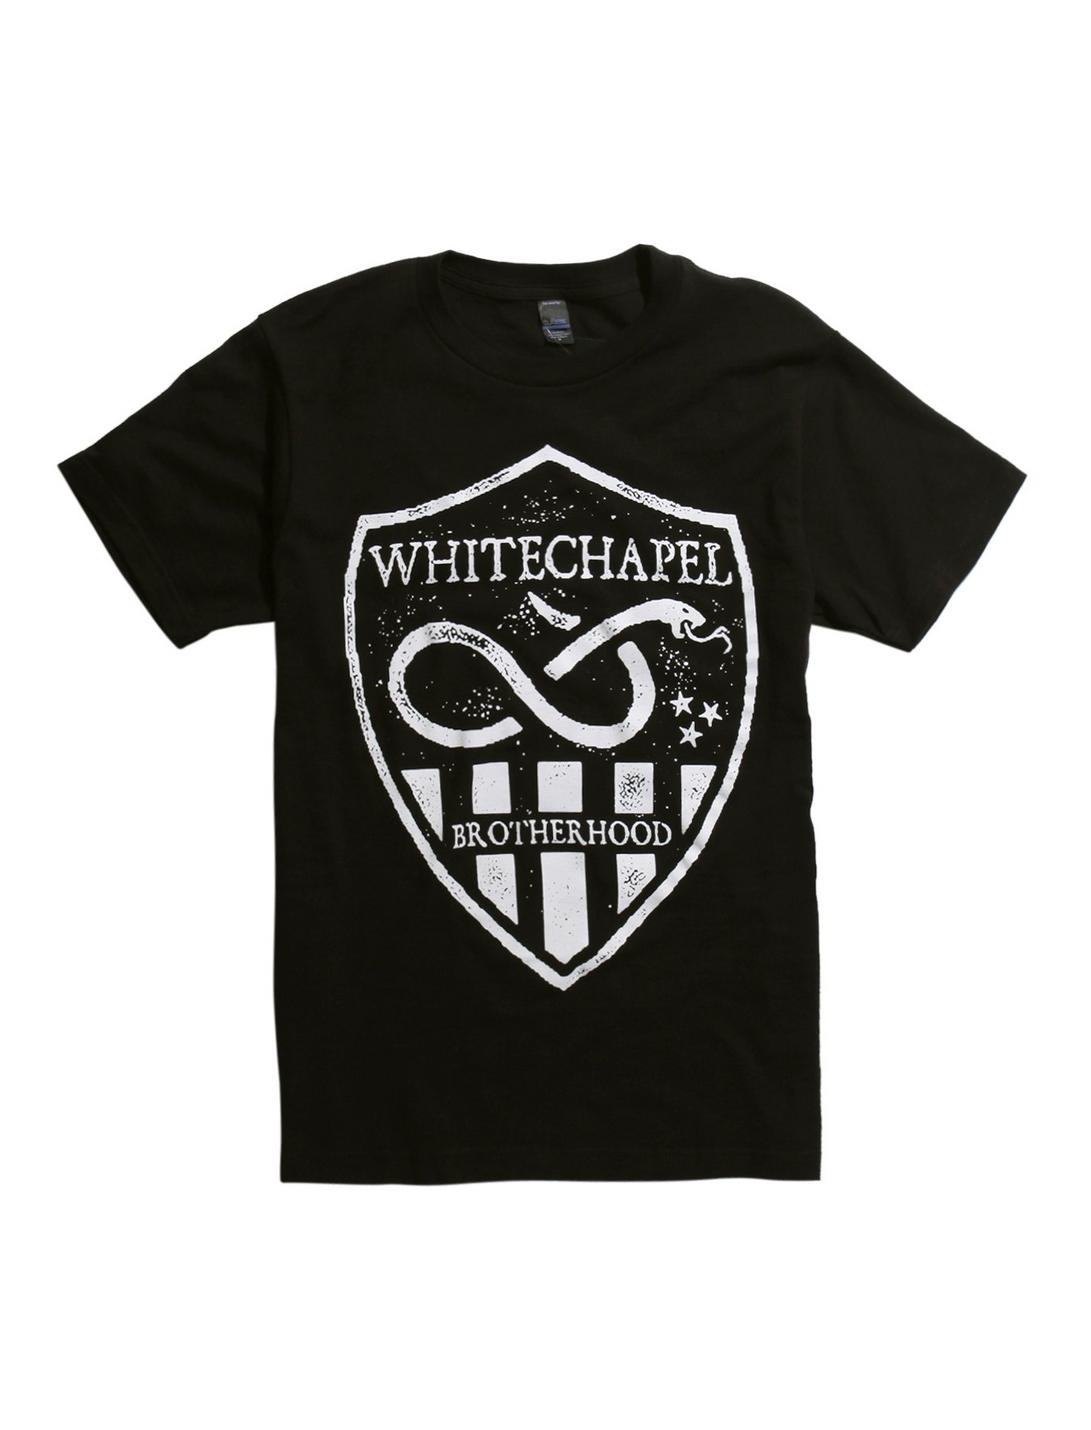 Whitechapel Brotherhood Crest T-Shirt, BLACK, hi-res